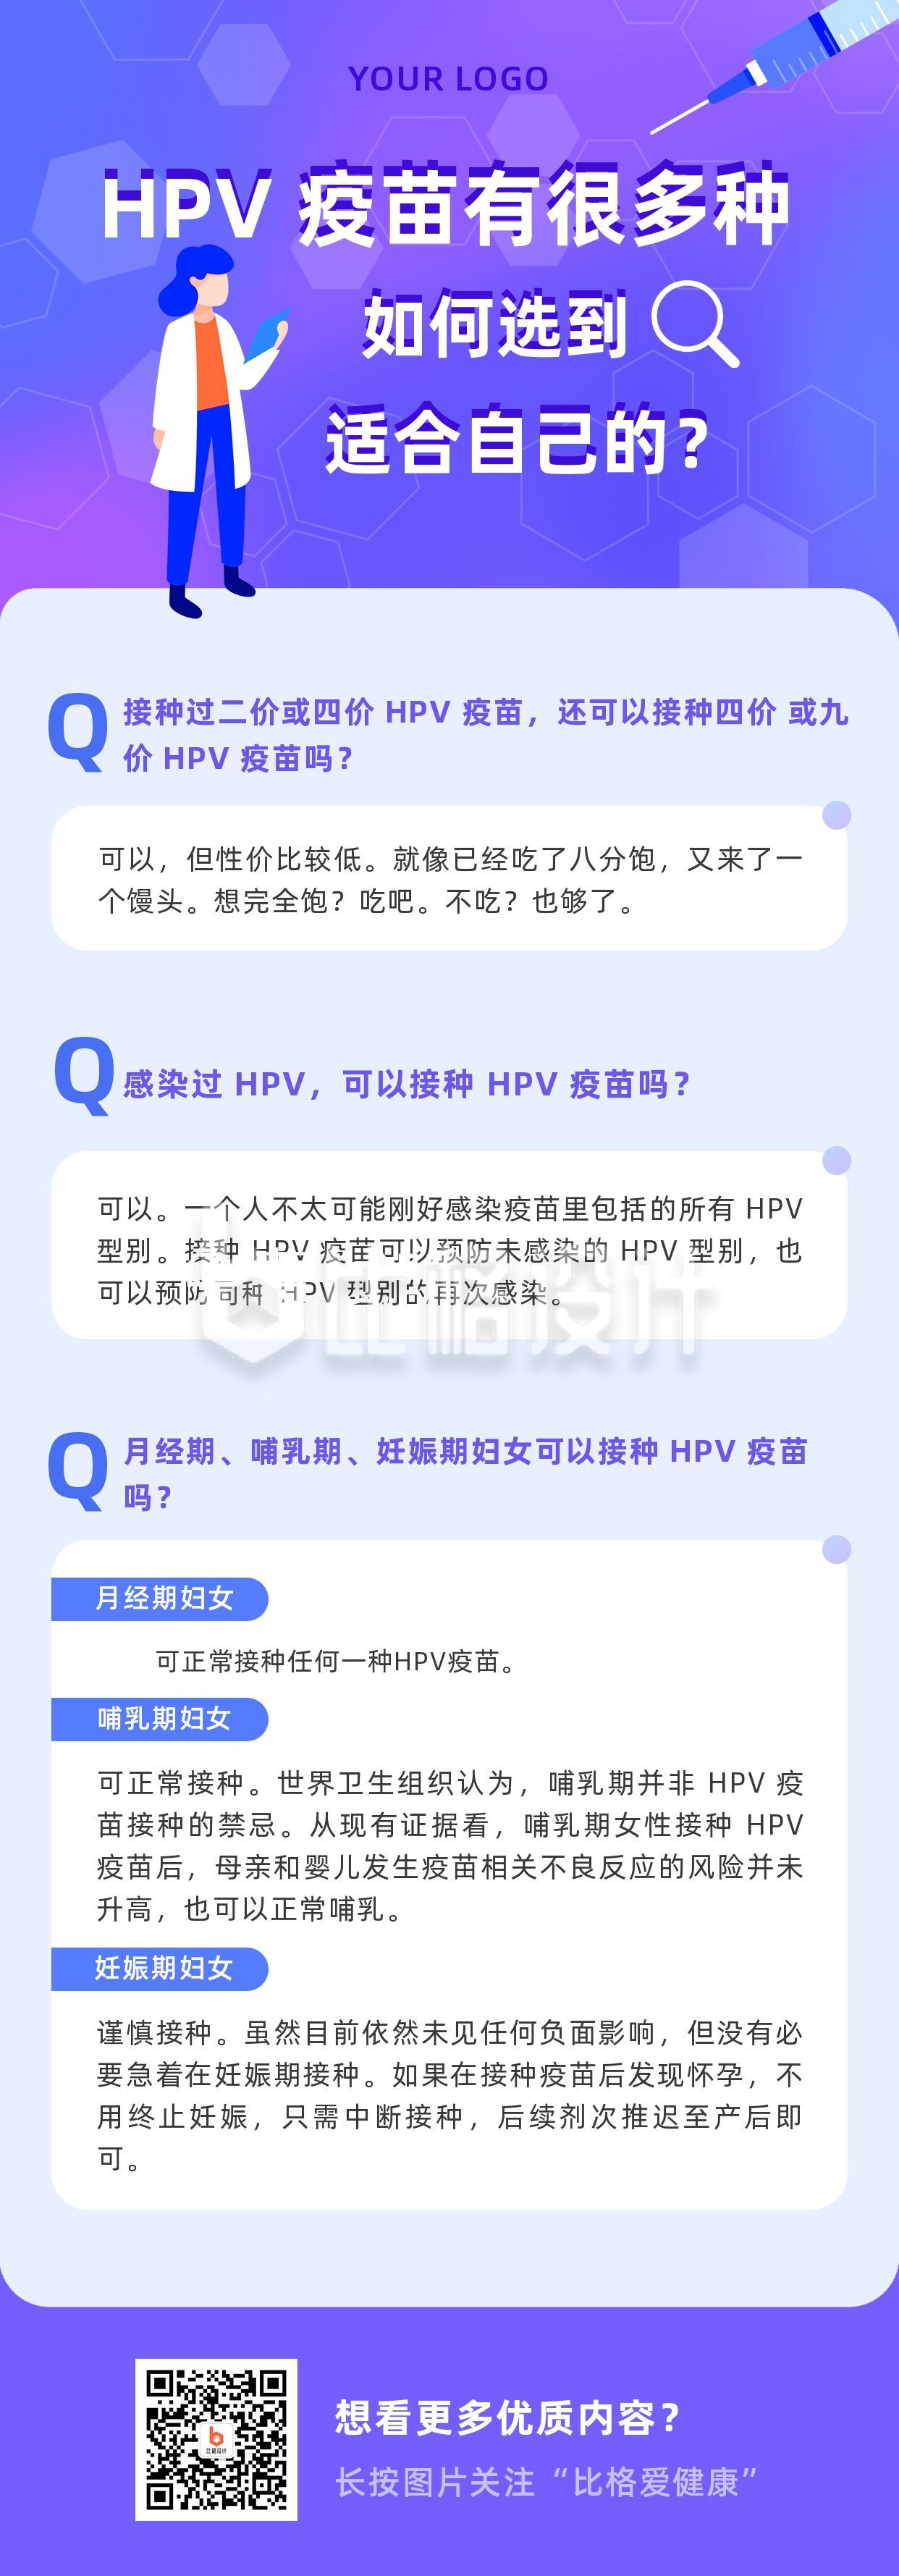 HPV疫苗医疗健康科普问答知识蓝紫渐变长图海报